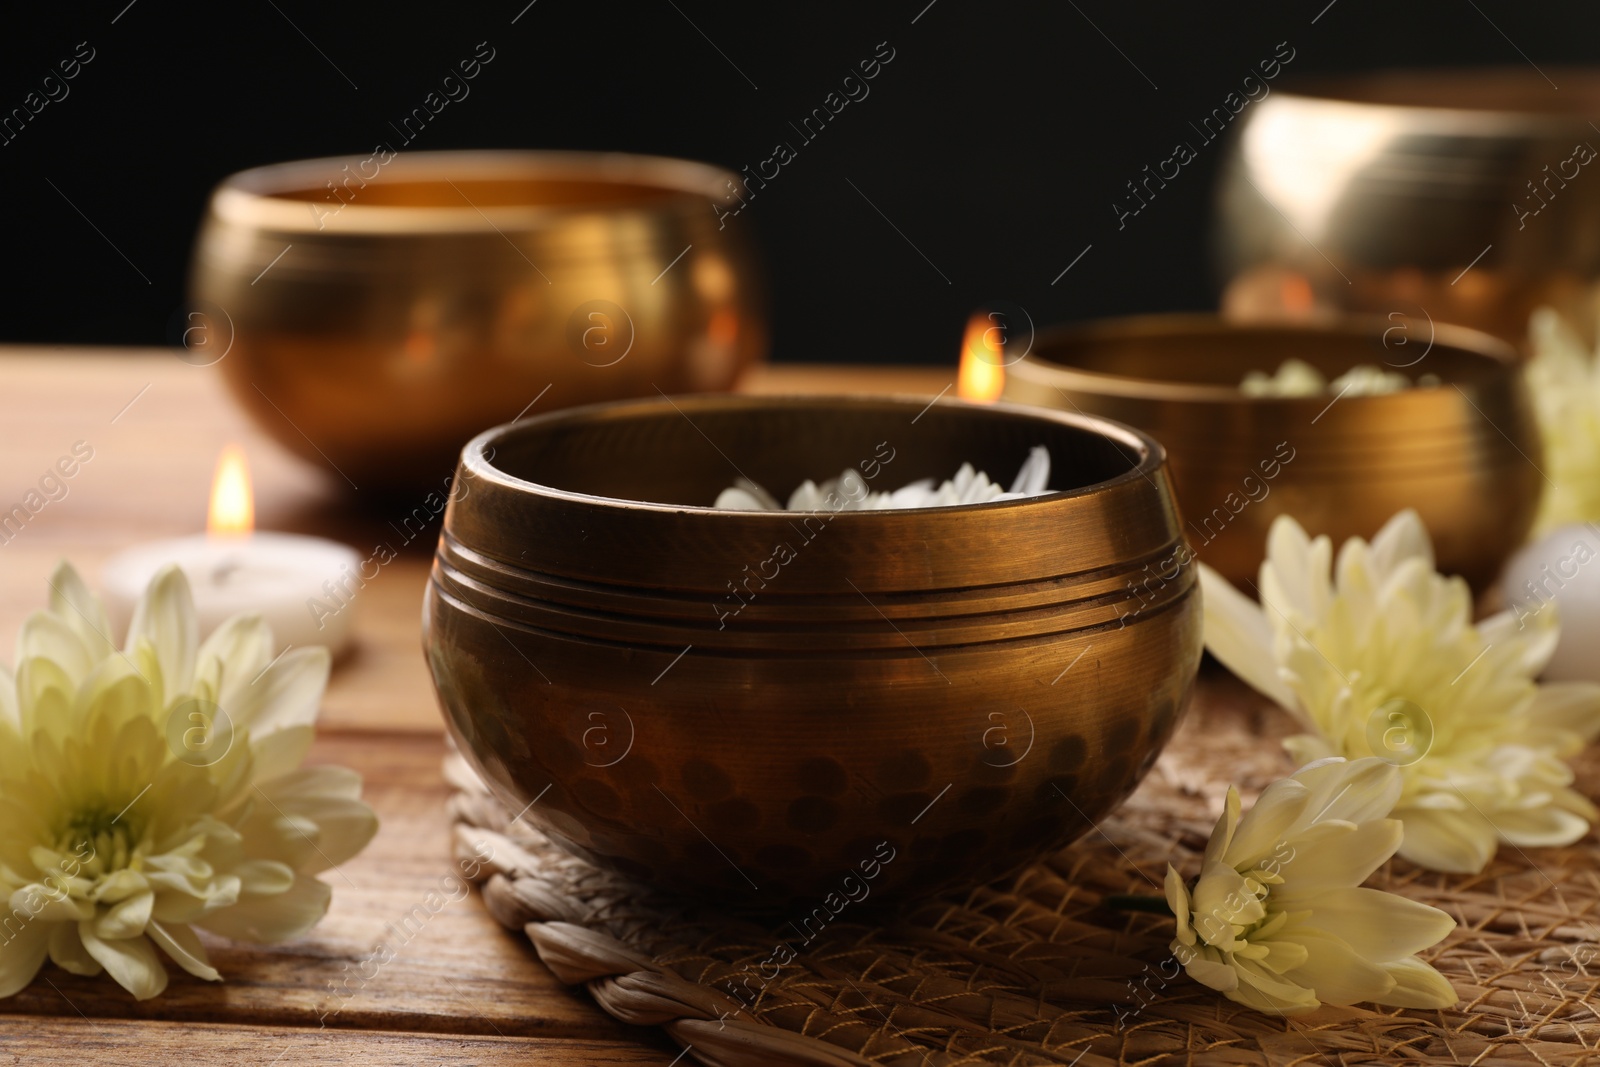 Photo of Tibetan singing bowls and beautiful chrysanthemum flowers on wooden table, closeup